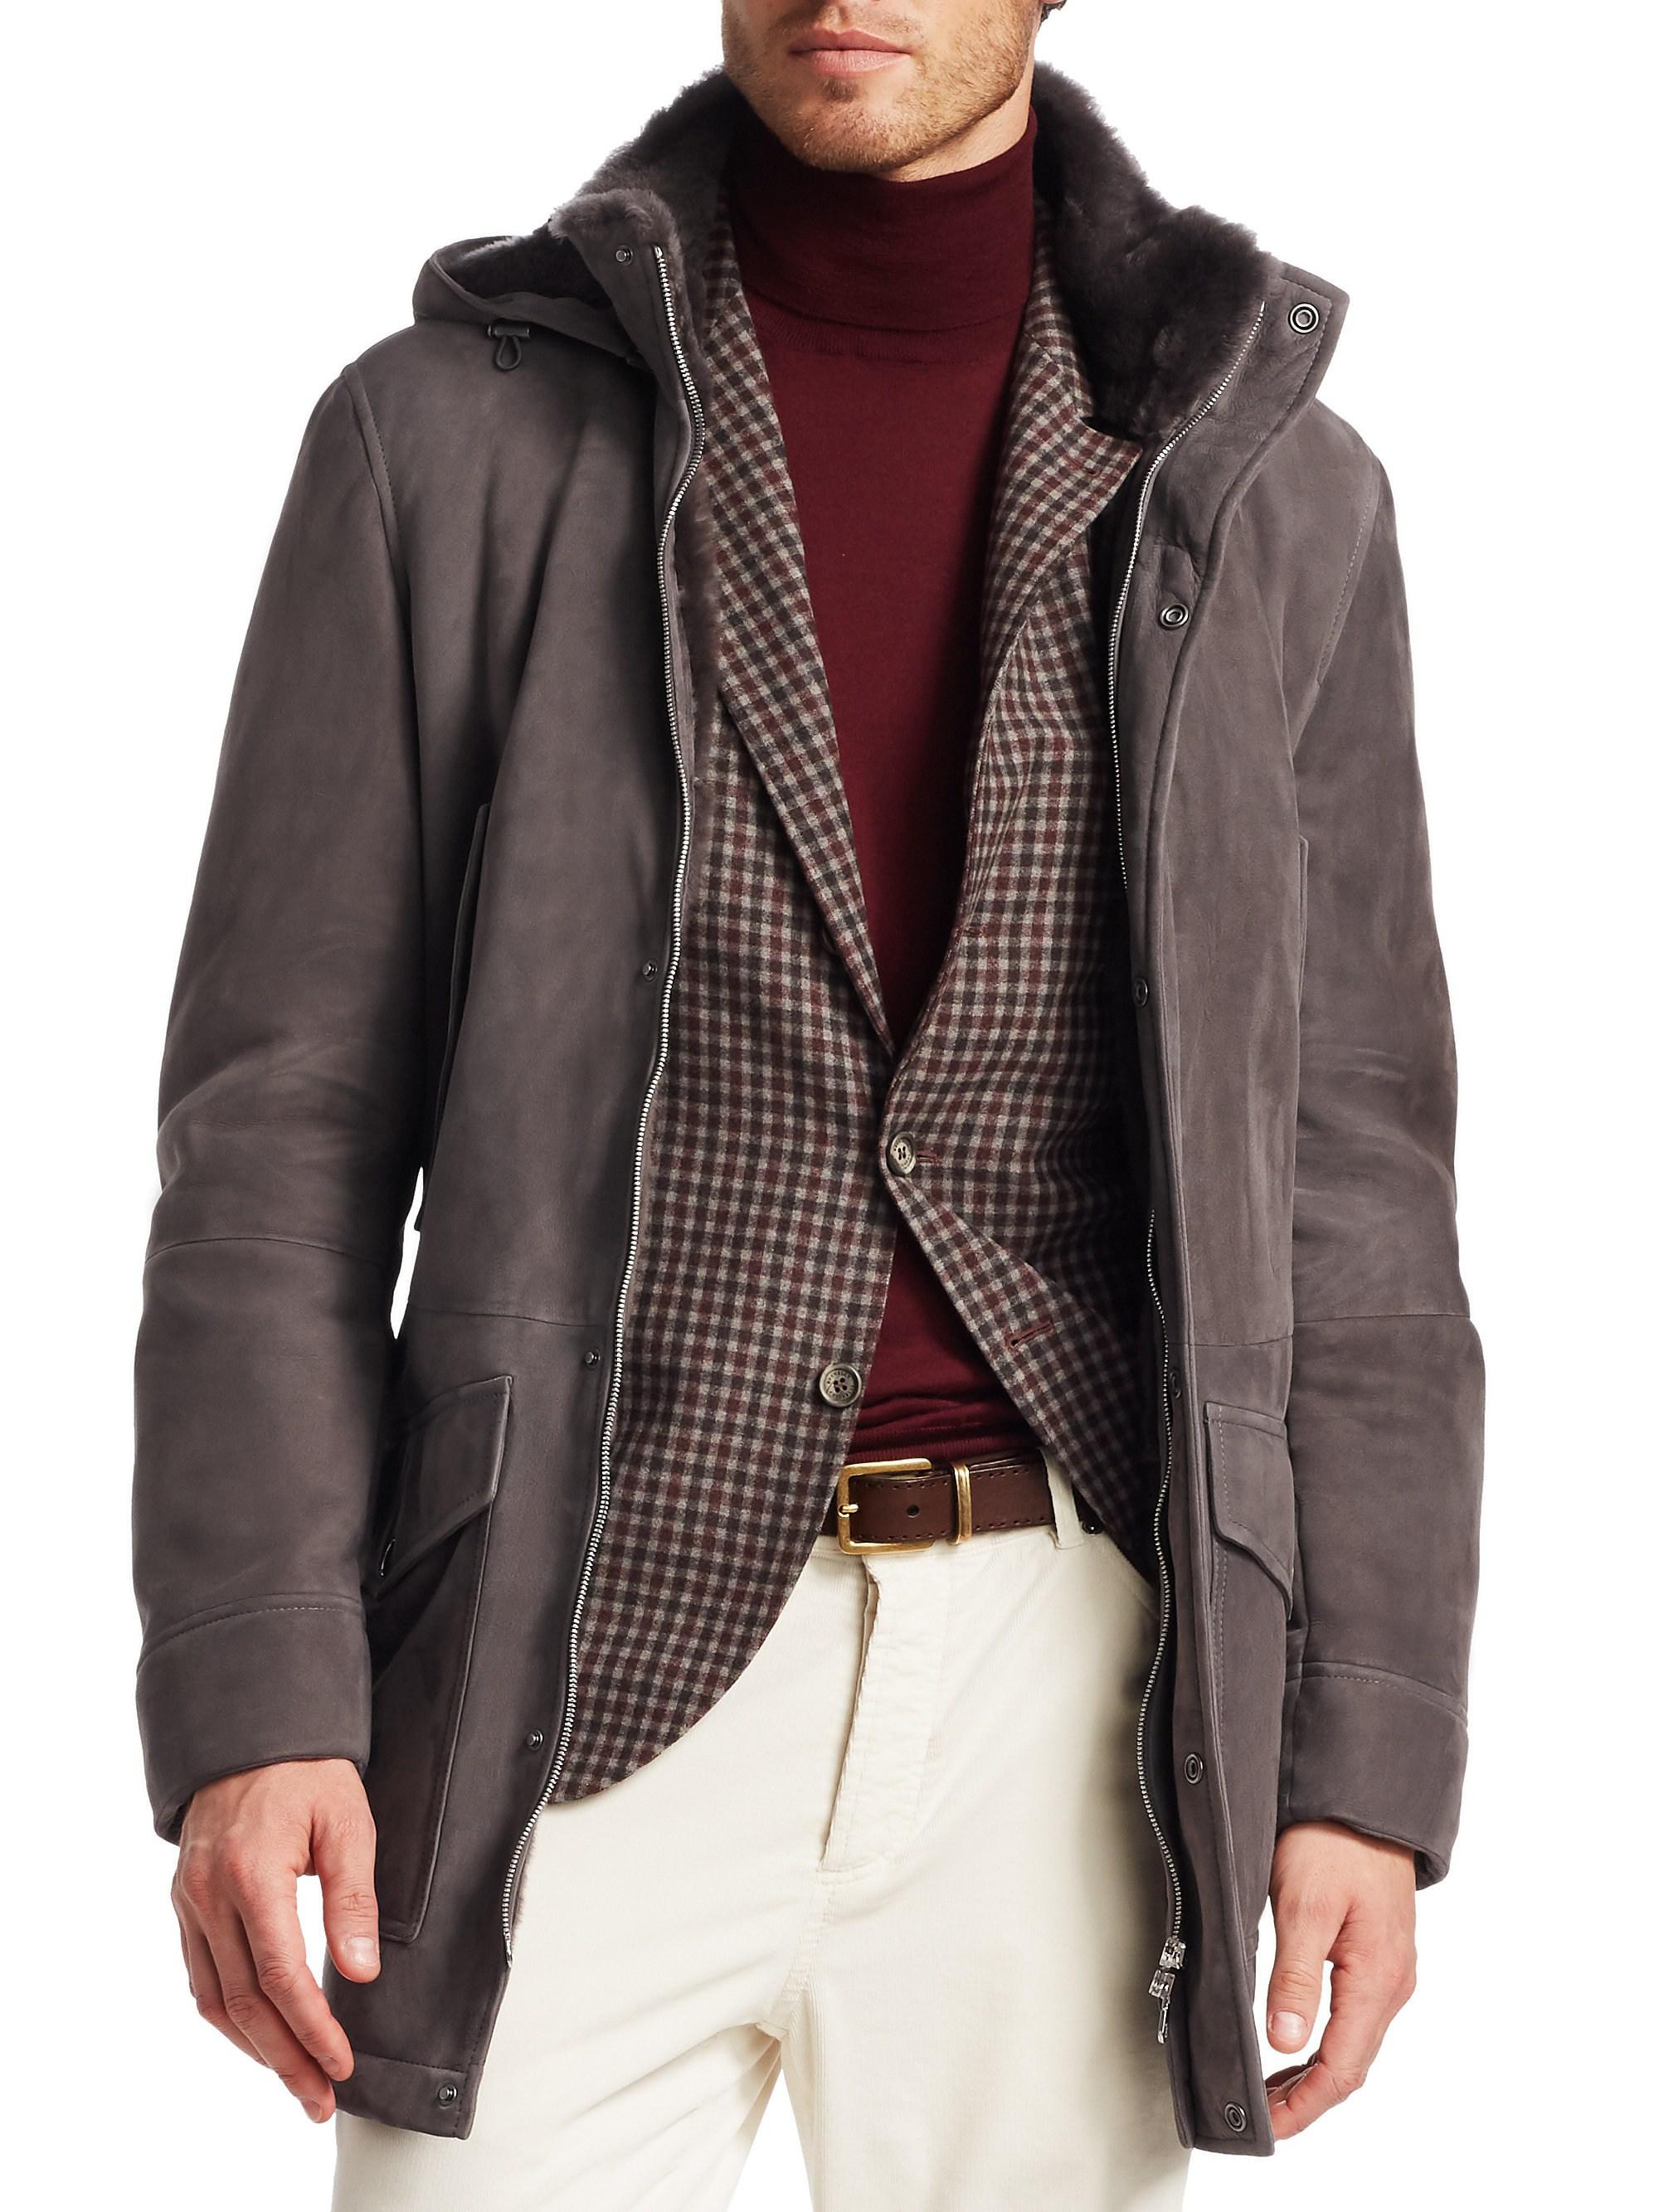 Lyst - Brunello Cucinelli Long Suede Shearling Jacket in Gray for Men